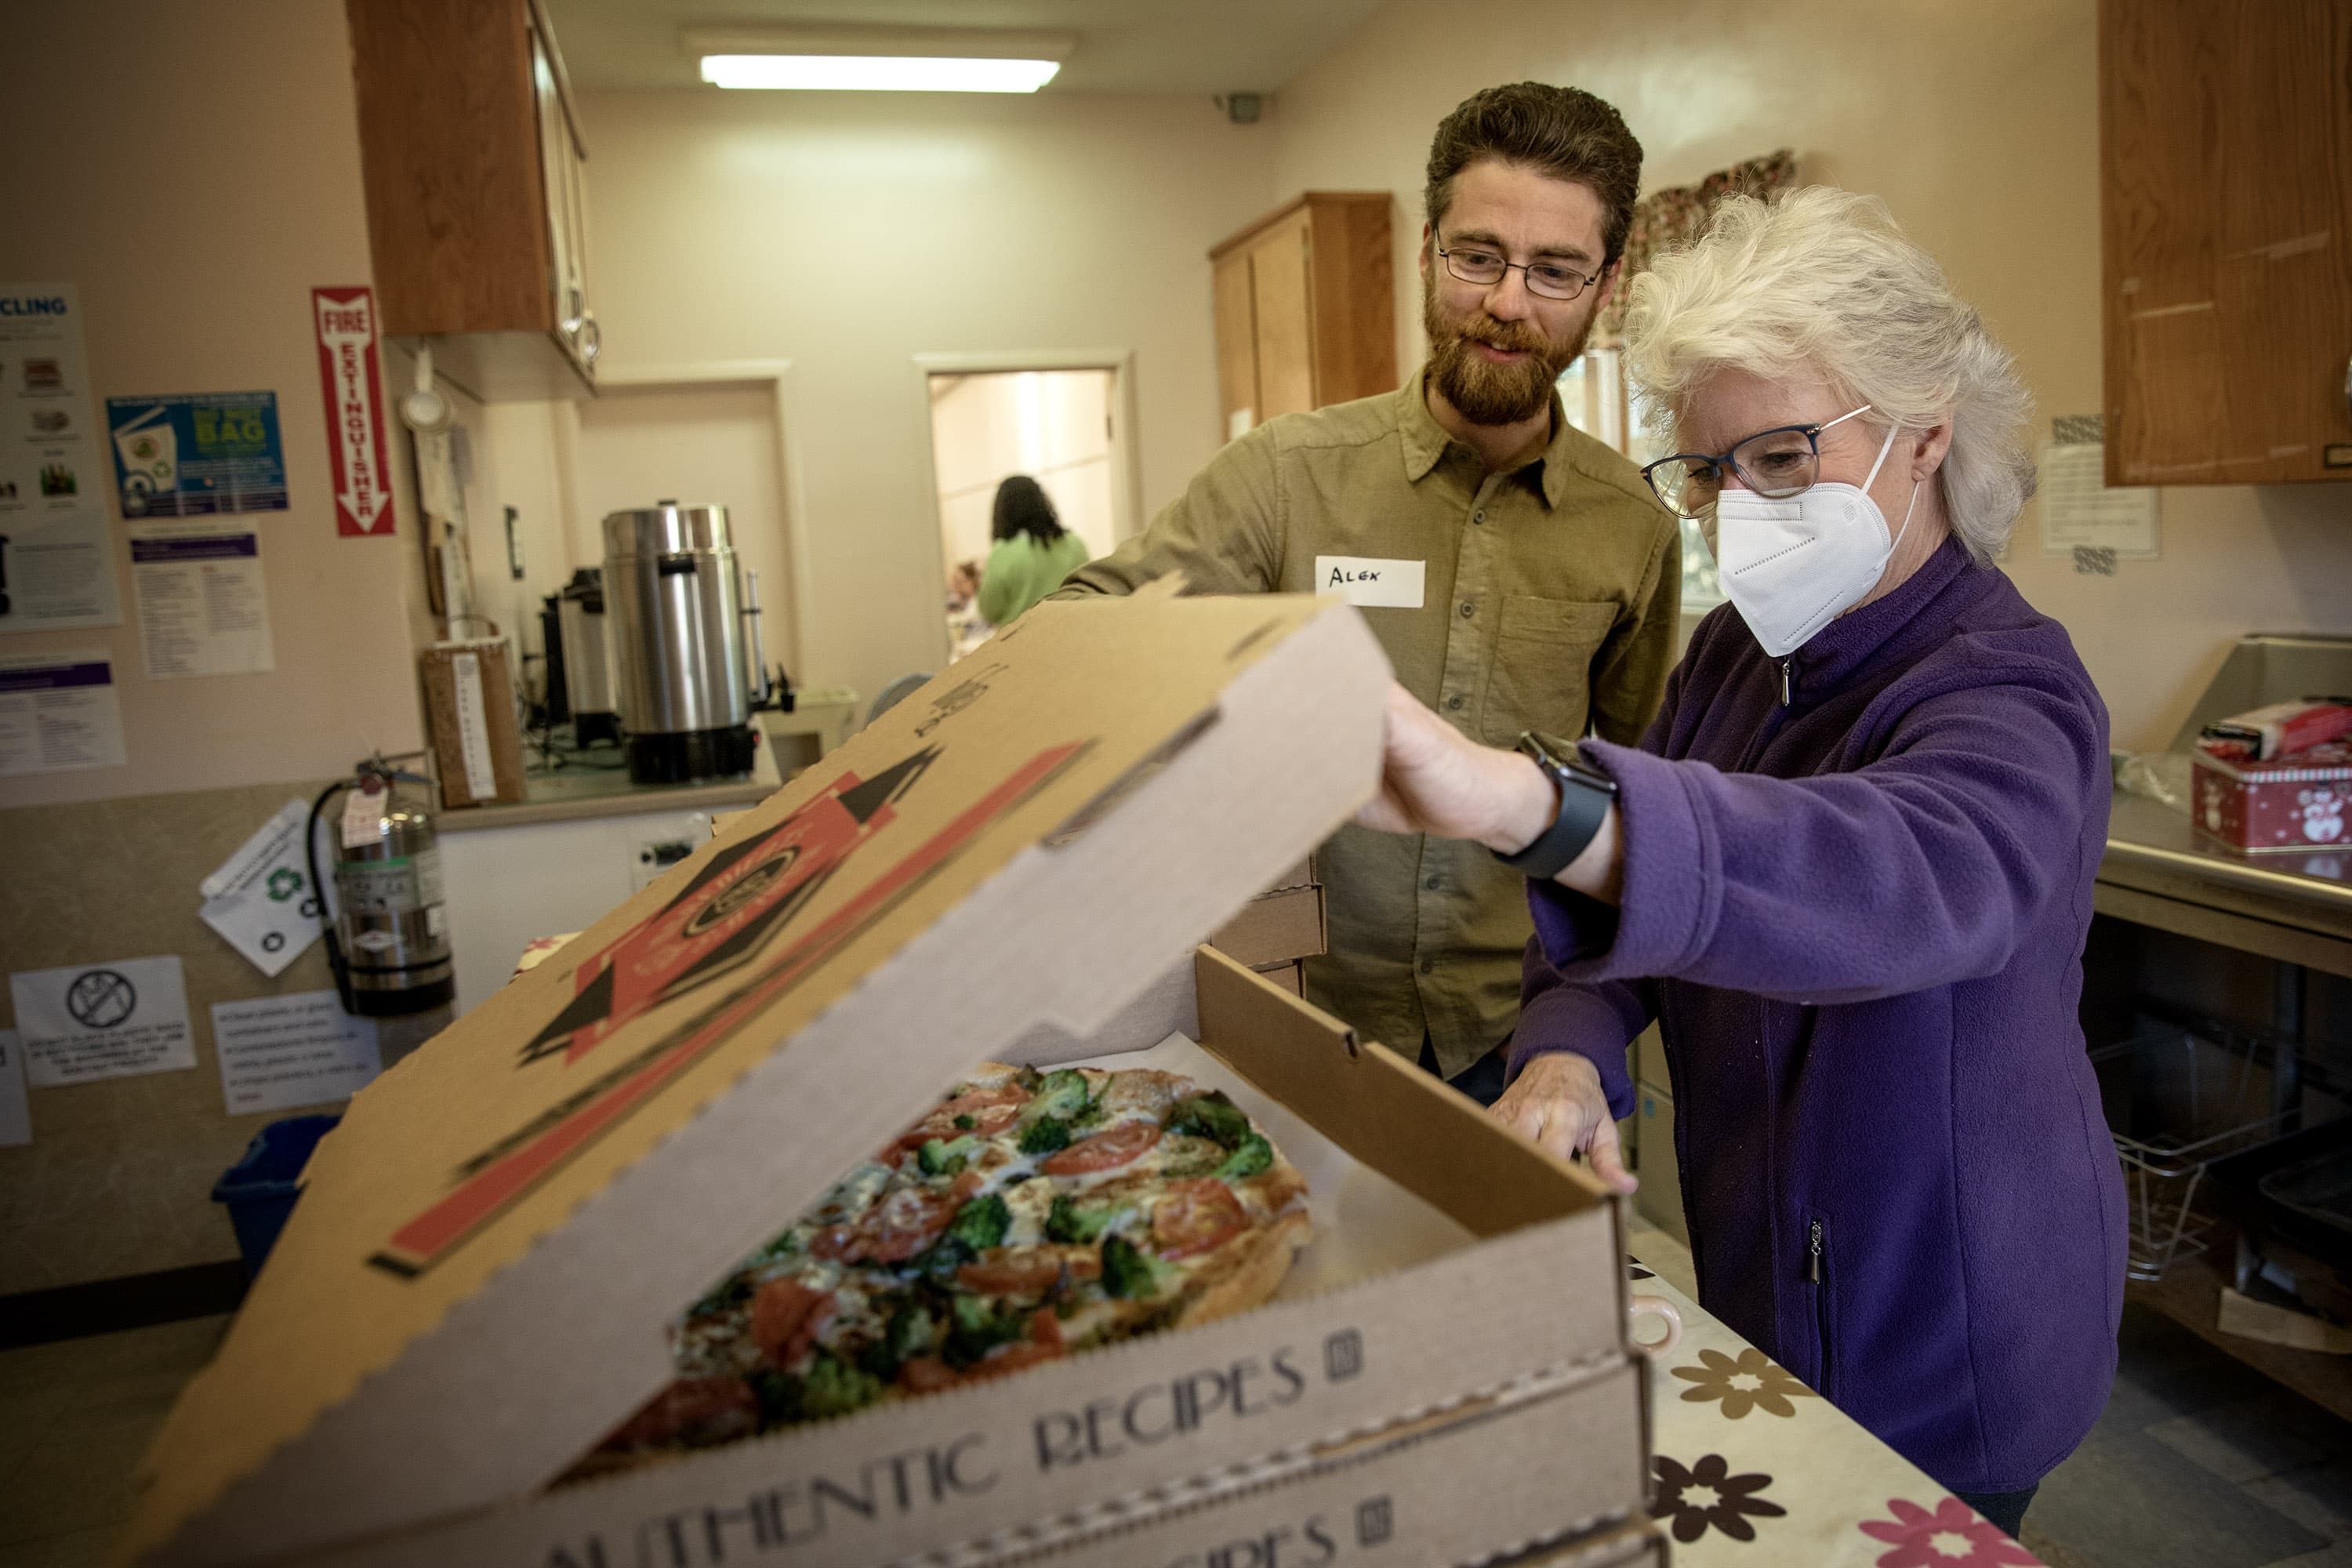 Framingham Repair Cafe organizers Alex Volfson and Marybeth Croci open pizzas brought in for repair volunteers. (Robin Lubbock/WBUR)